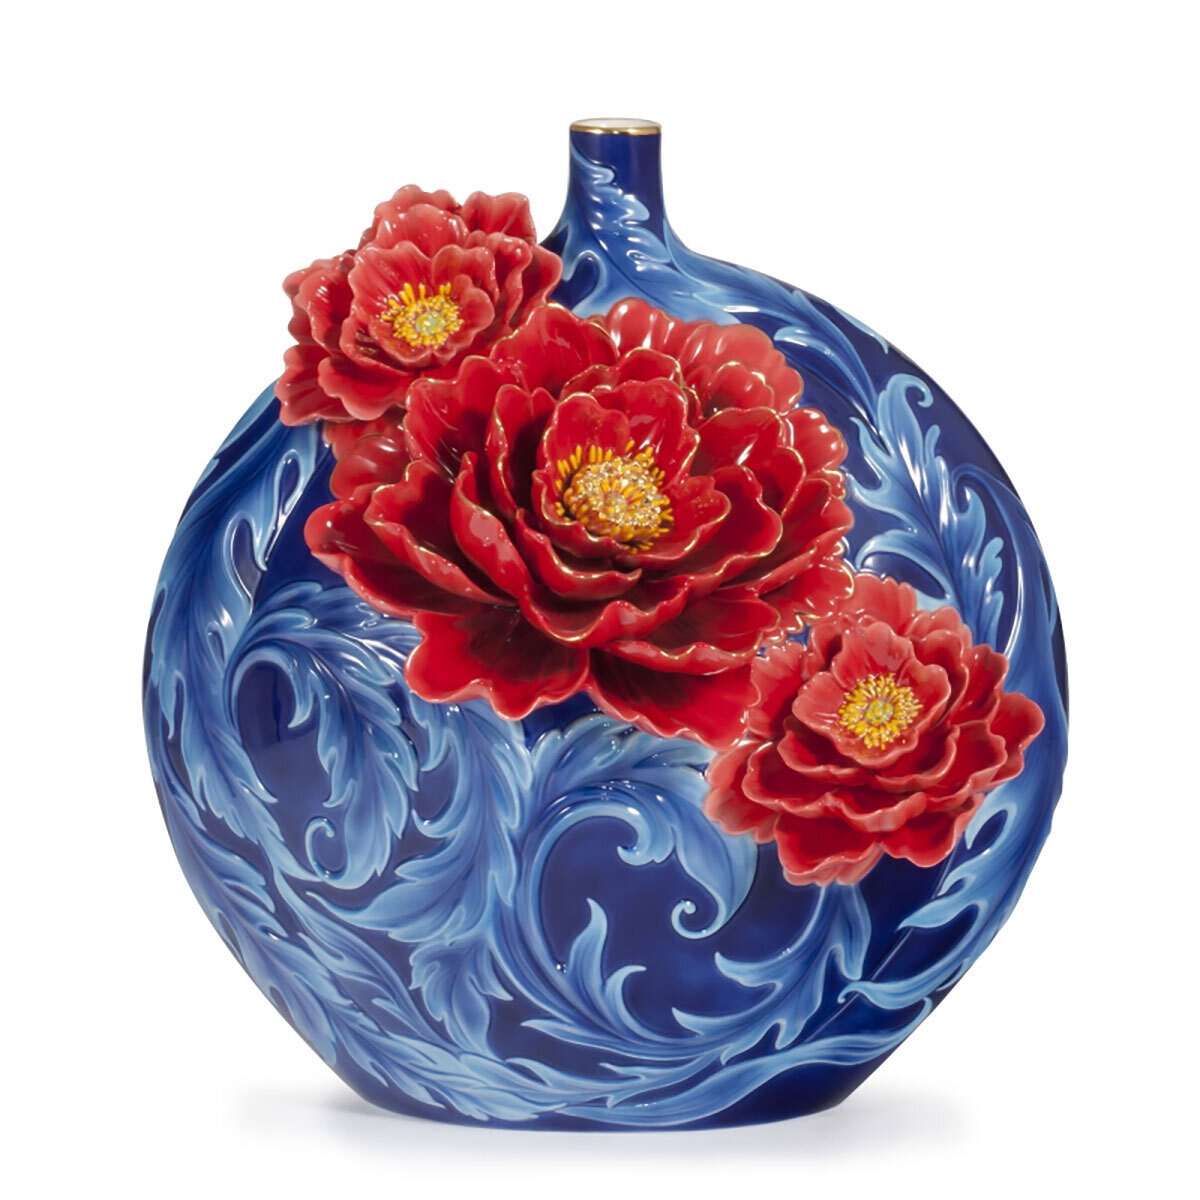 Franz Porcelain Blossom Of Peony Design Sculptured Vase With Wooden Base Limited Edition FZ03887